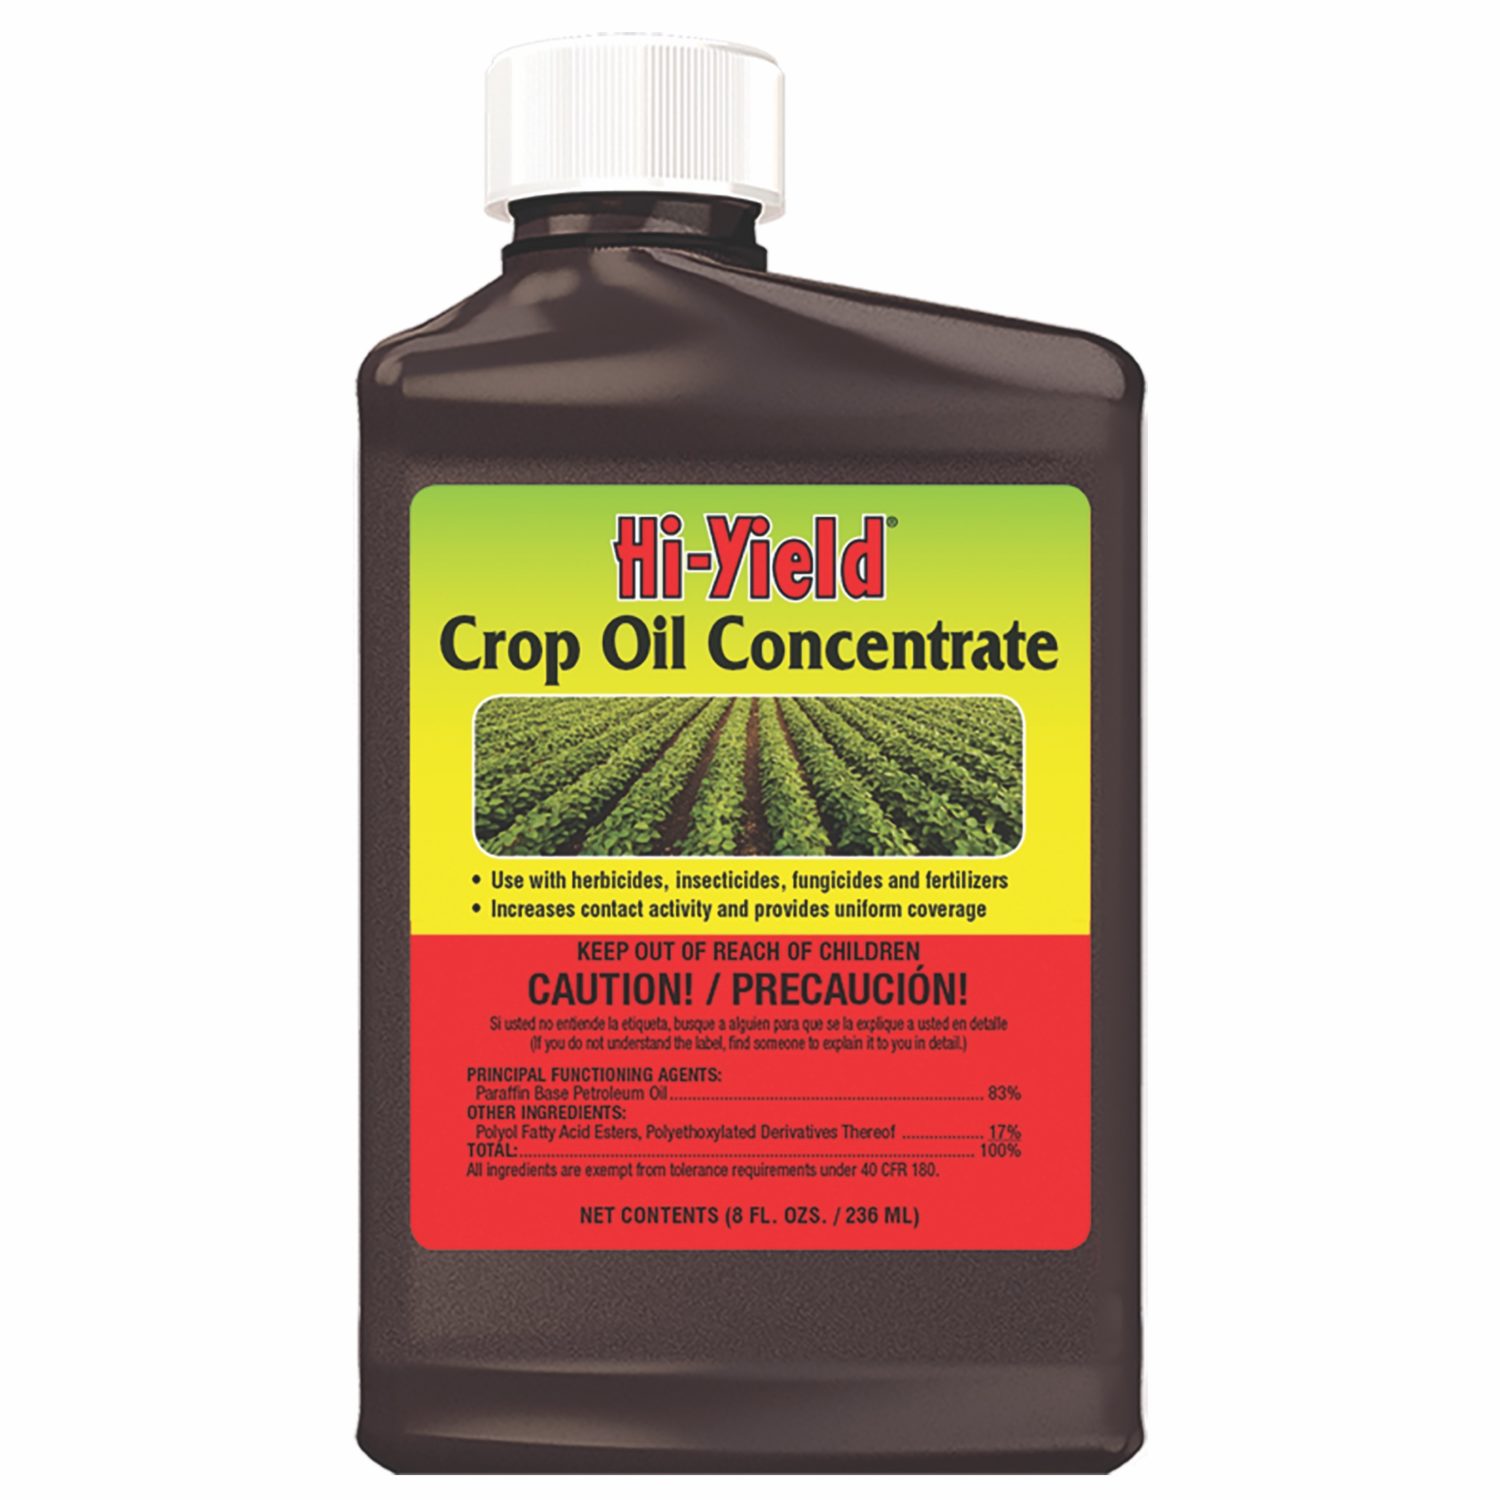 VPG FERTILOME Crop Oil Concentrate